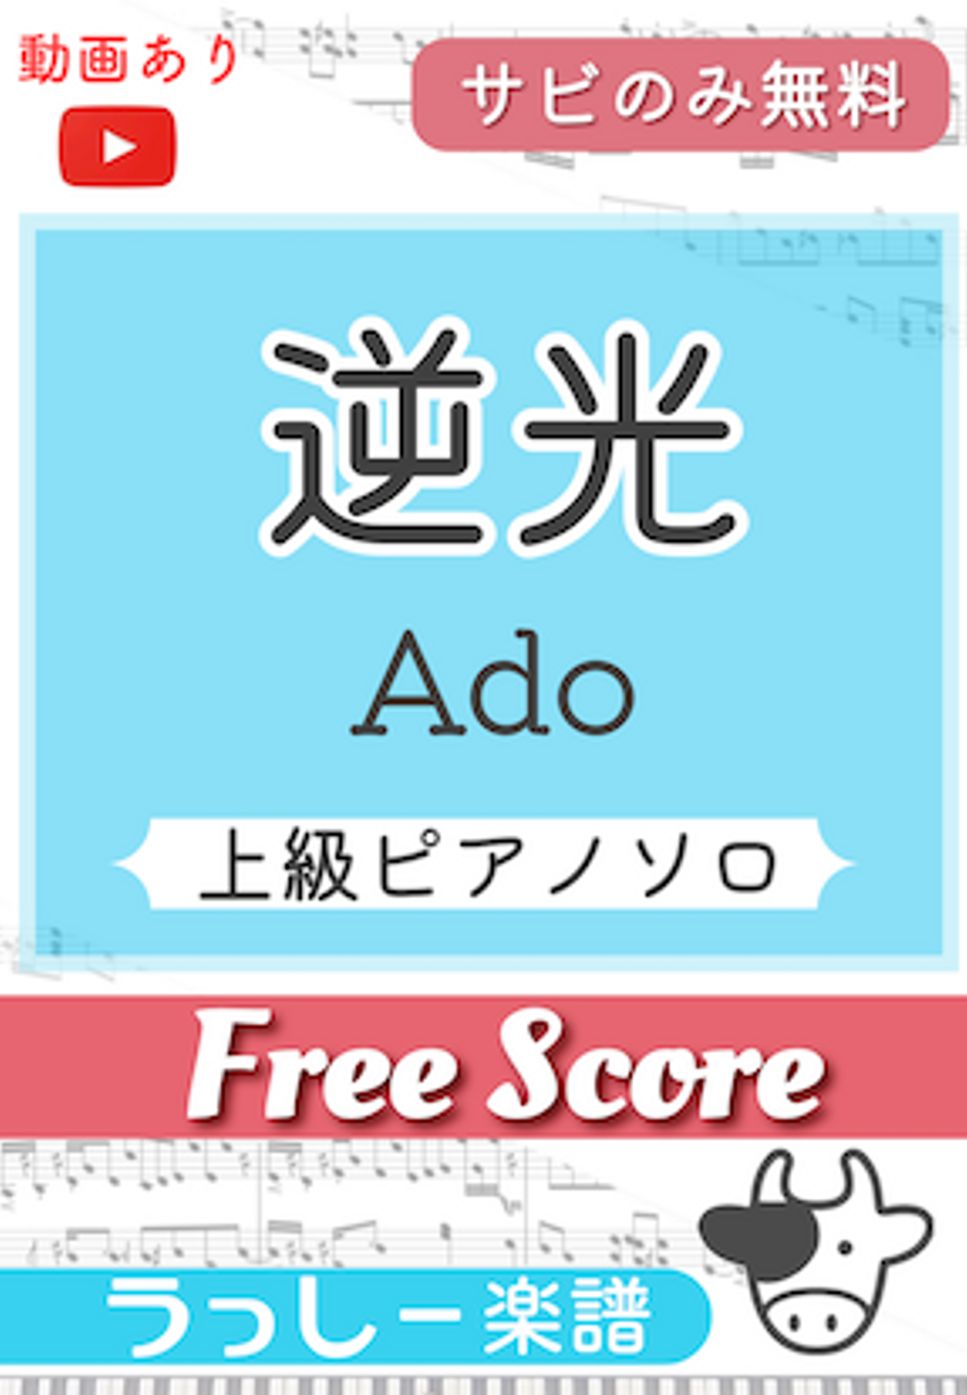 Ado - 逆光 (サビのみ無料) by 牛武奏人